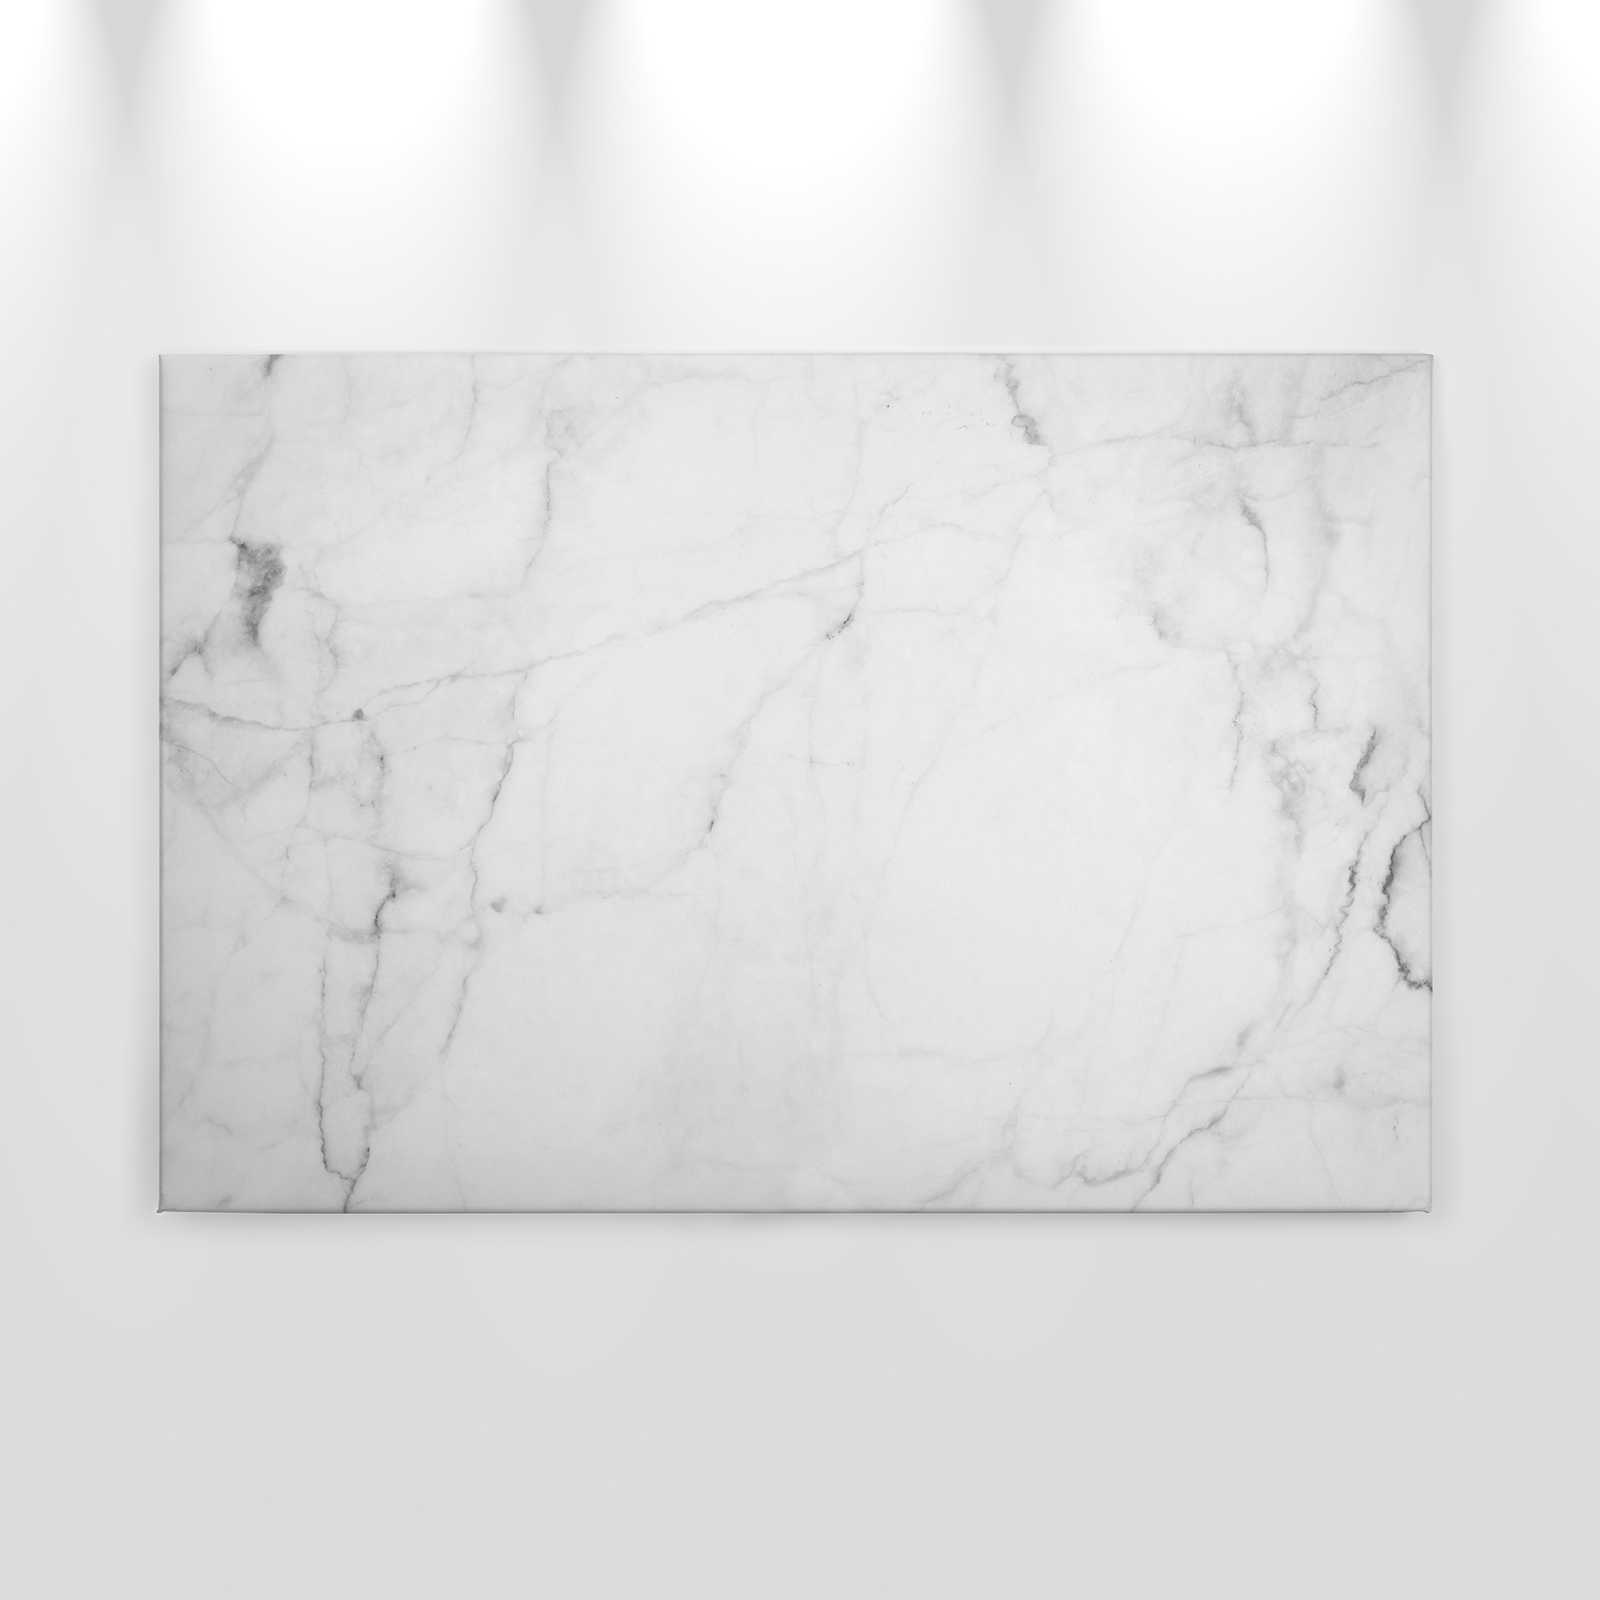             Leinwand mit dezenter Marmor-Optik – 0,90 m x 0,60 m
        